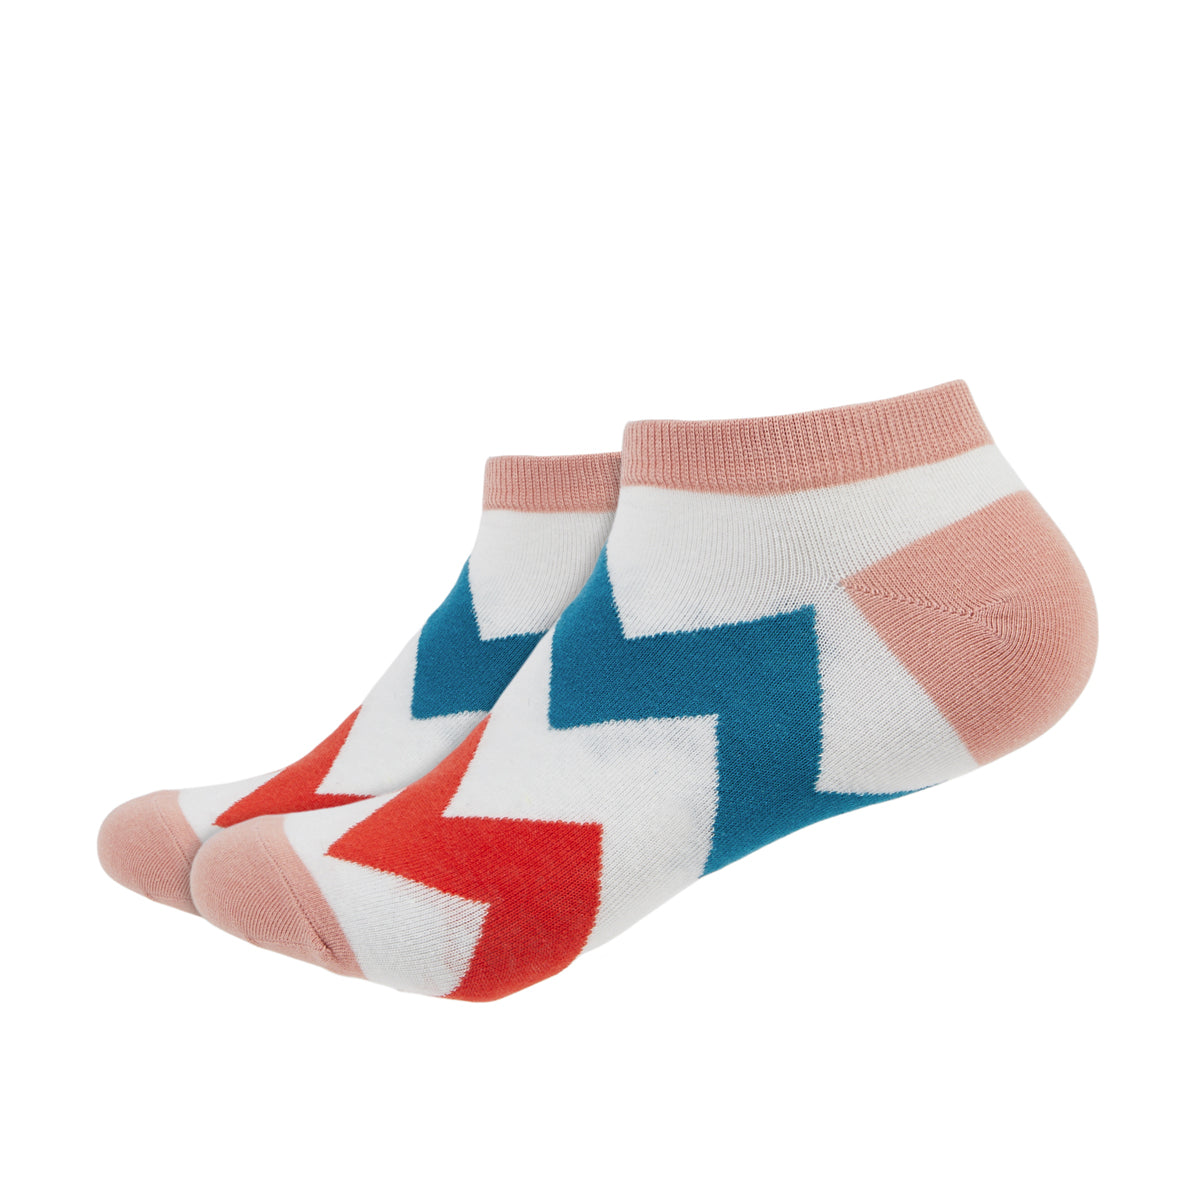 Jagged Printed Ankle Socks - IDENTITY Apparel Shop